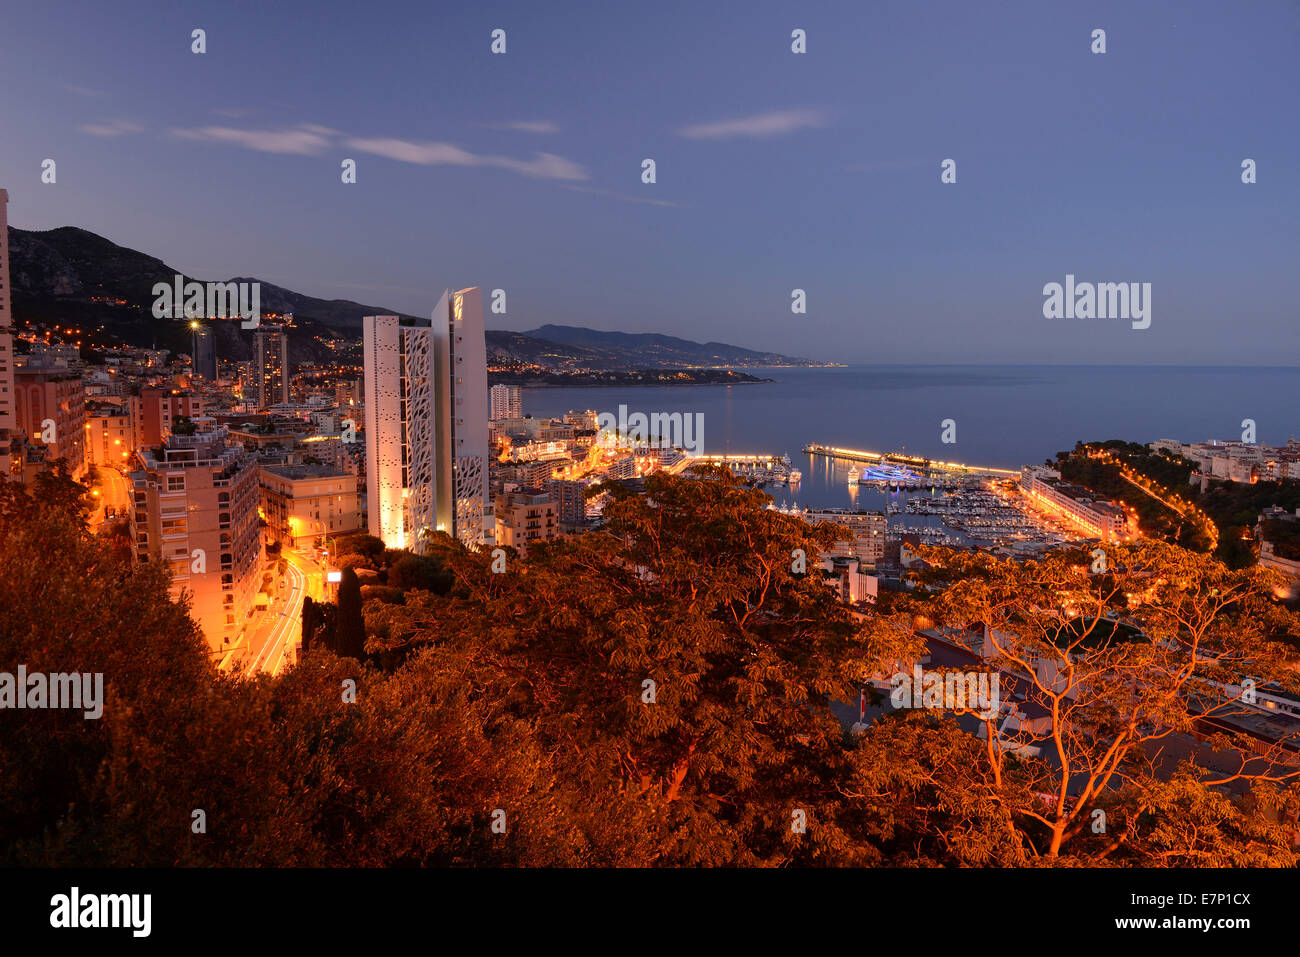 Europe, France, Monaco, Monte Carlo, French, Riviera, marina, luxury, Mediterranean, coast, city, tax haven, night Stock Photo